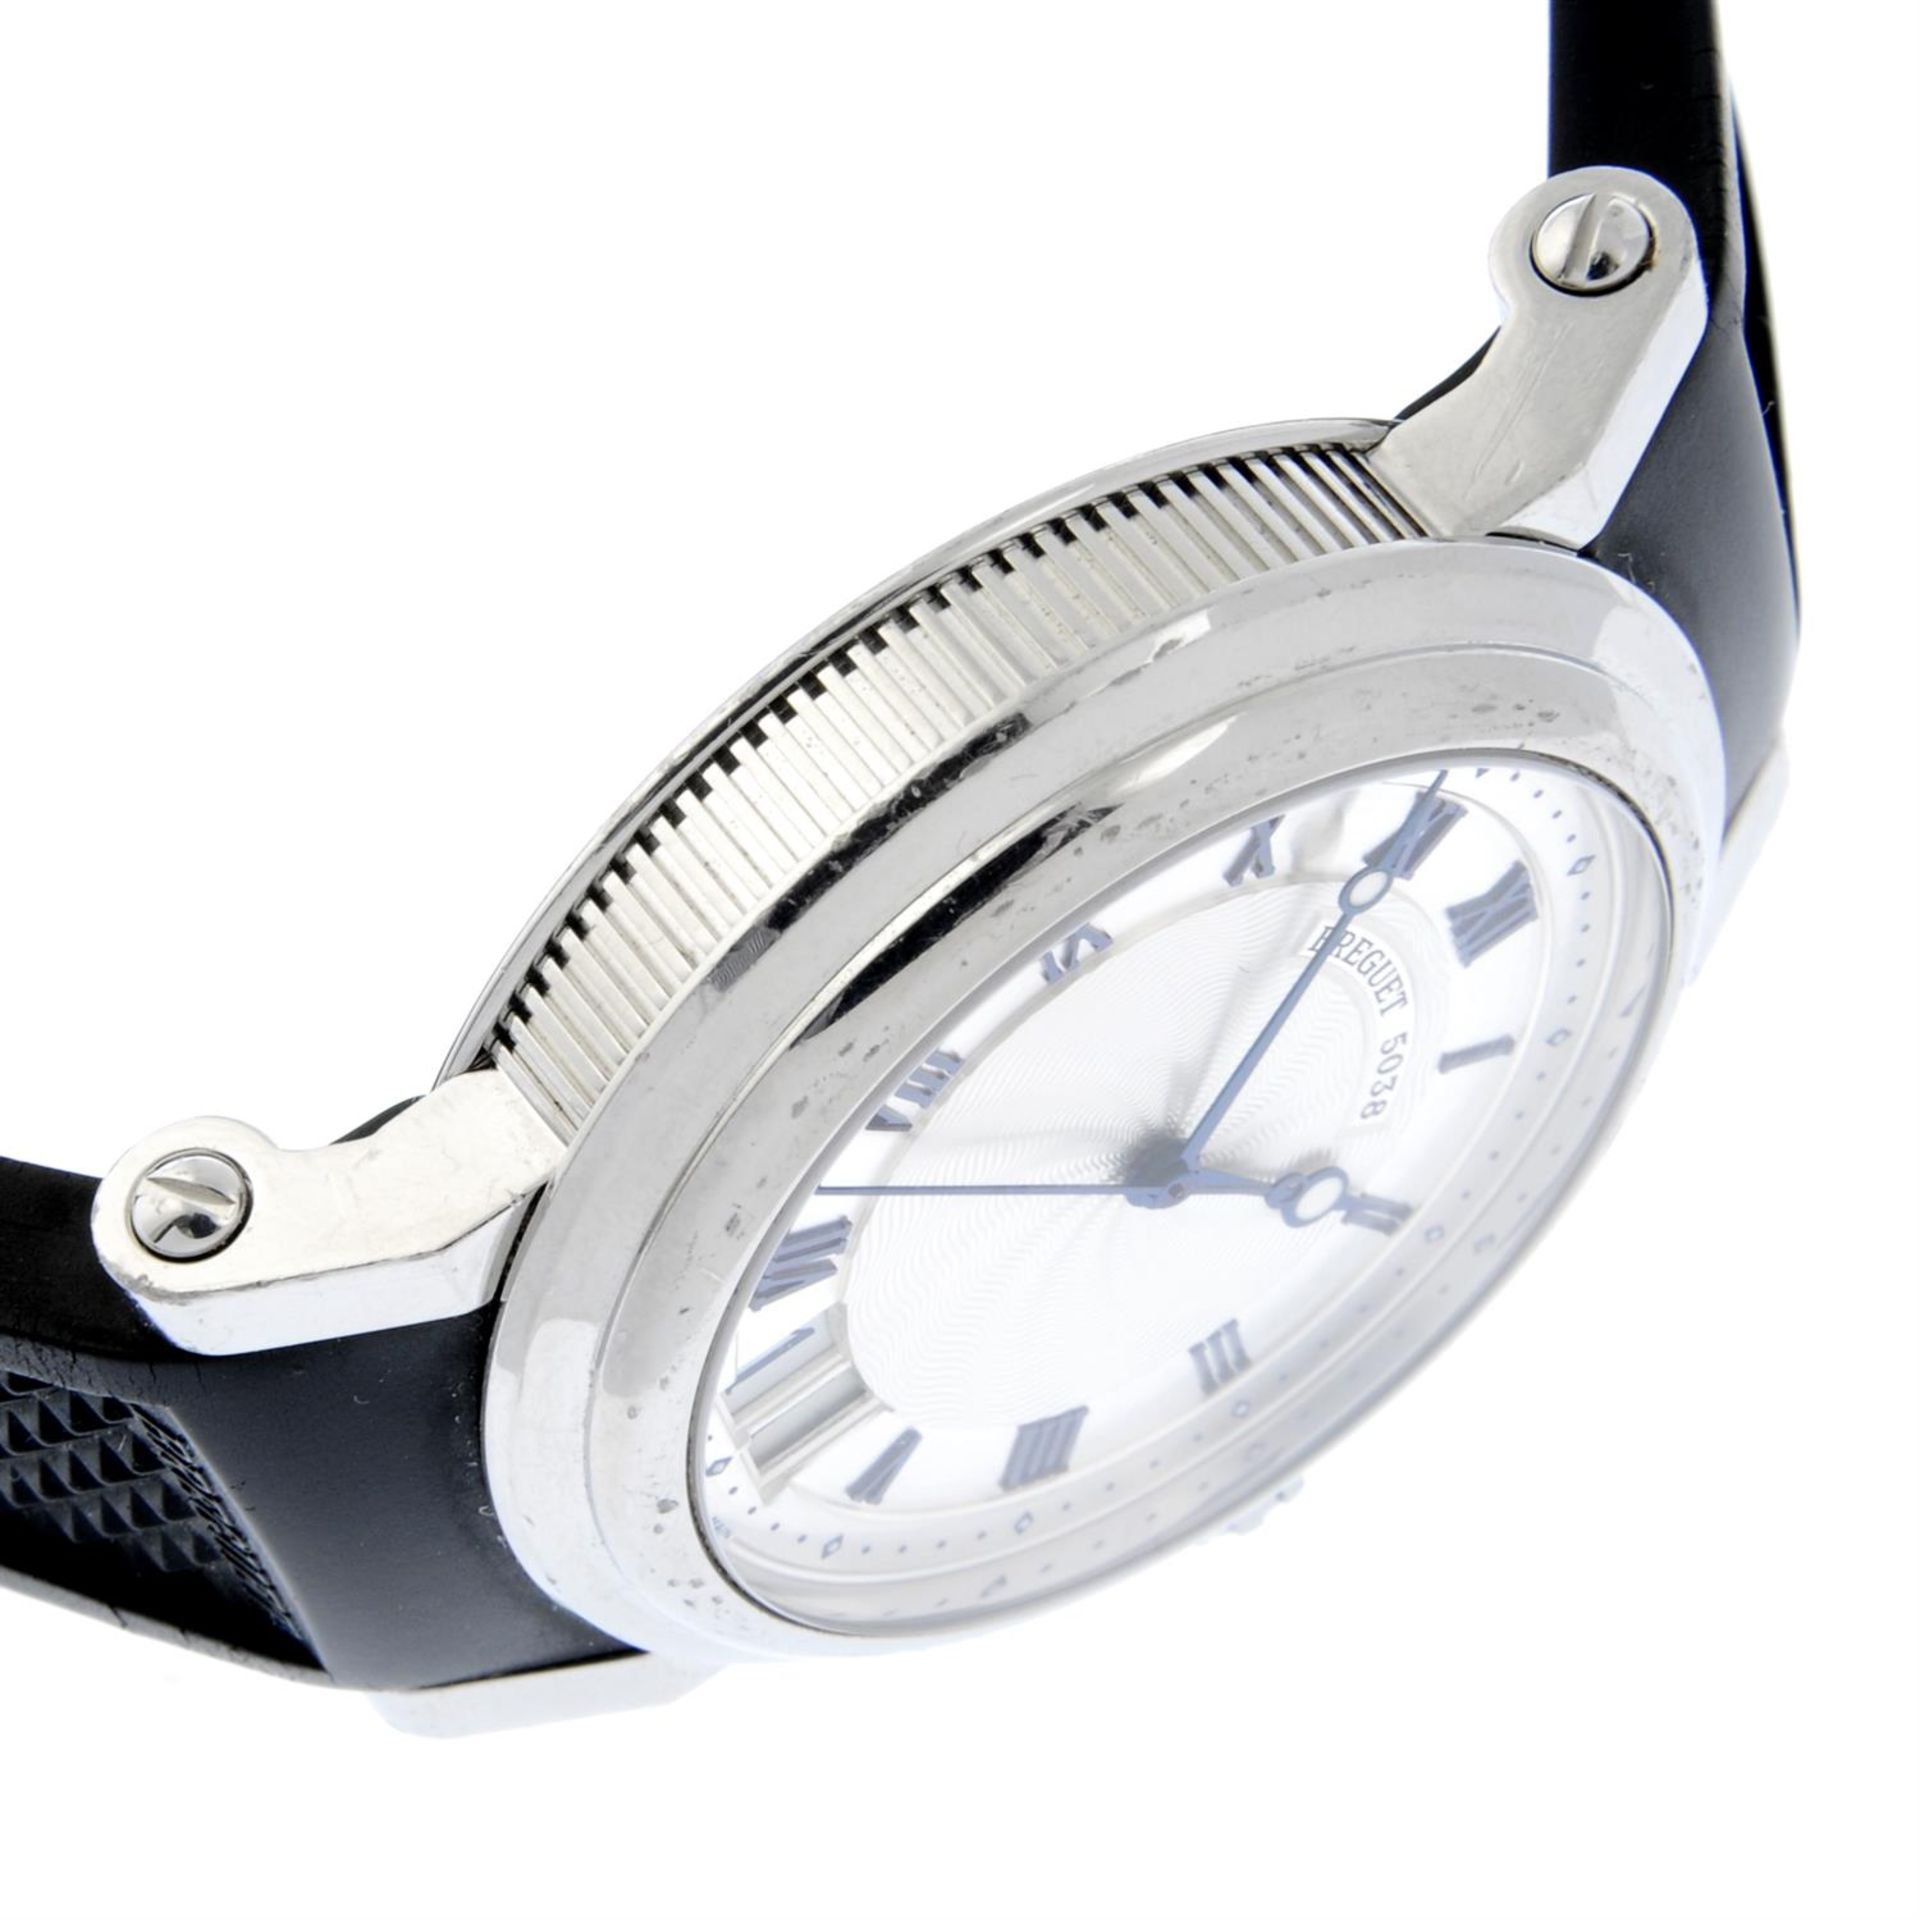 BREGUET - a stainless steel Marine wrist watch, 40mm. - Image 4 of 6